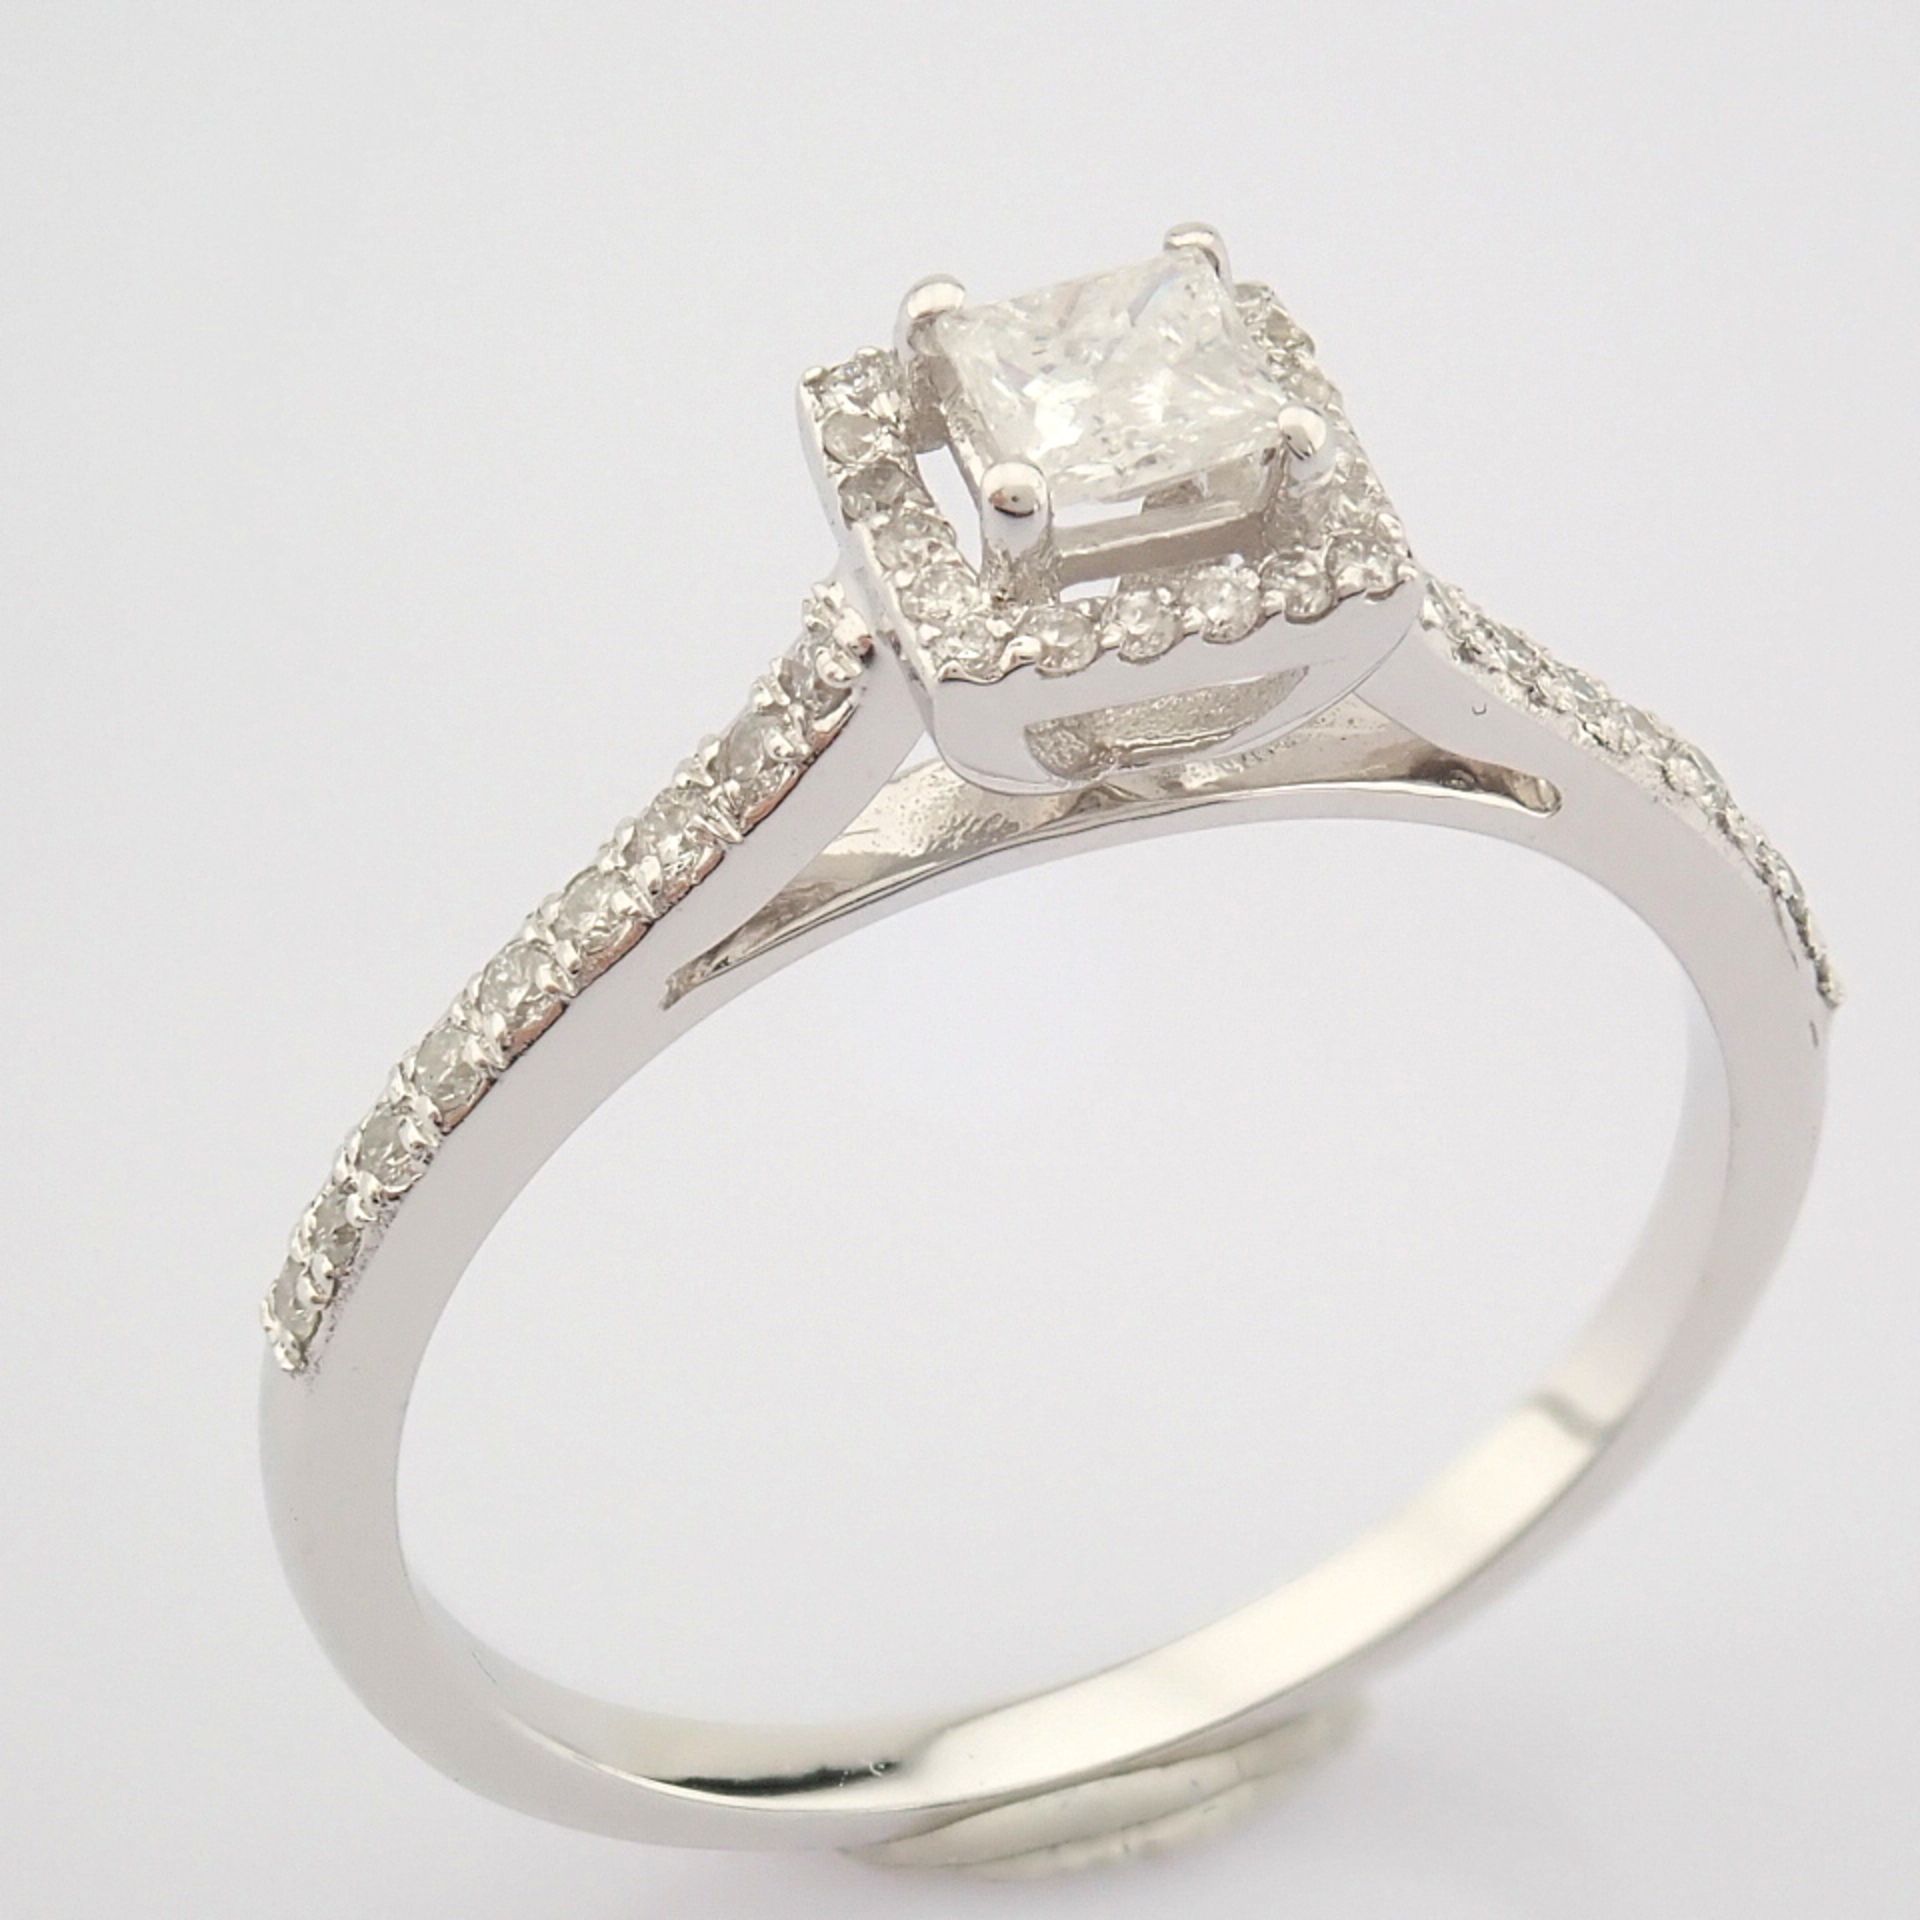 Certificated 14K White Gold Princess Cut Diamond & Diamond Ring (Total 0.37 ct Stone) - Image 4 of 10